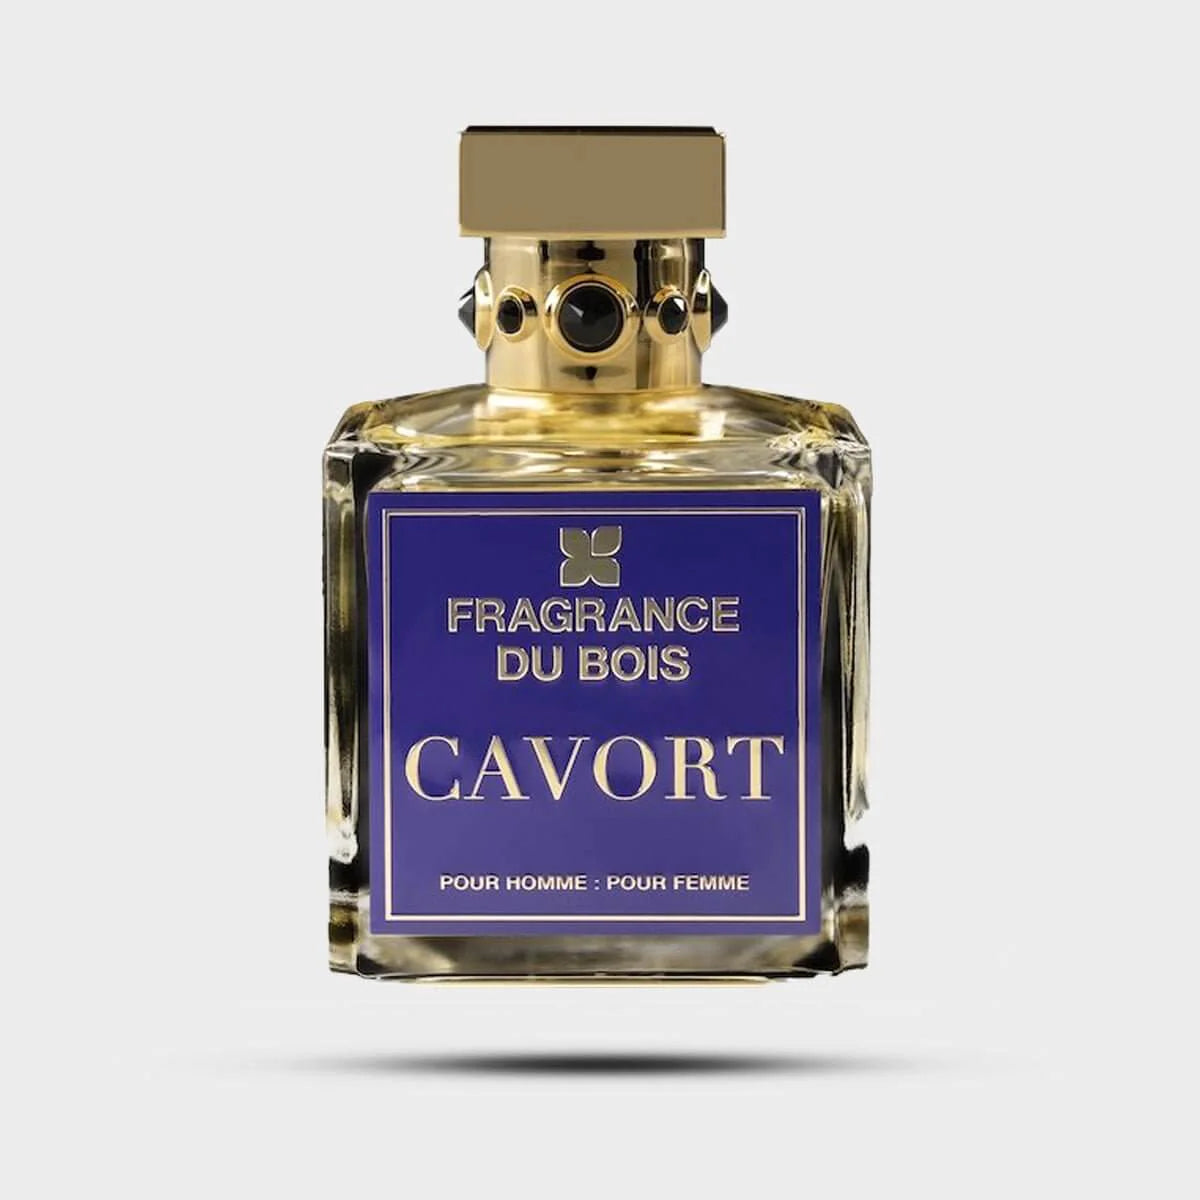 Fragrance Du Bois Cavort.